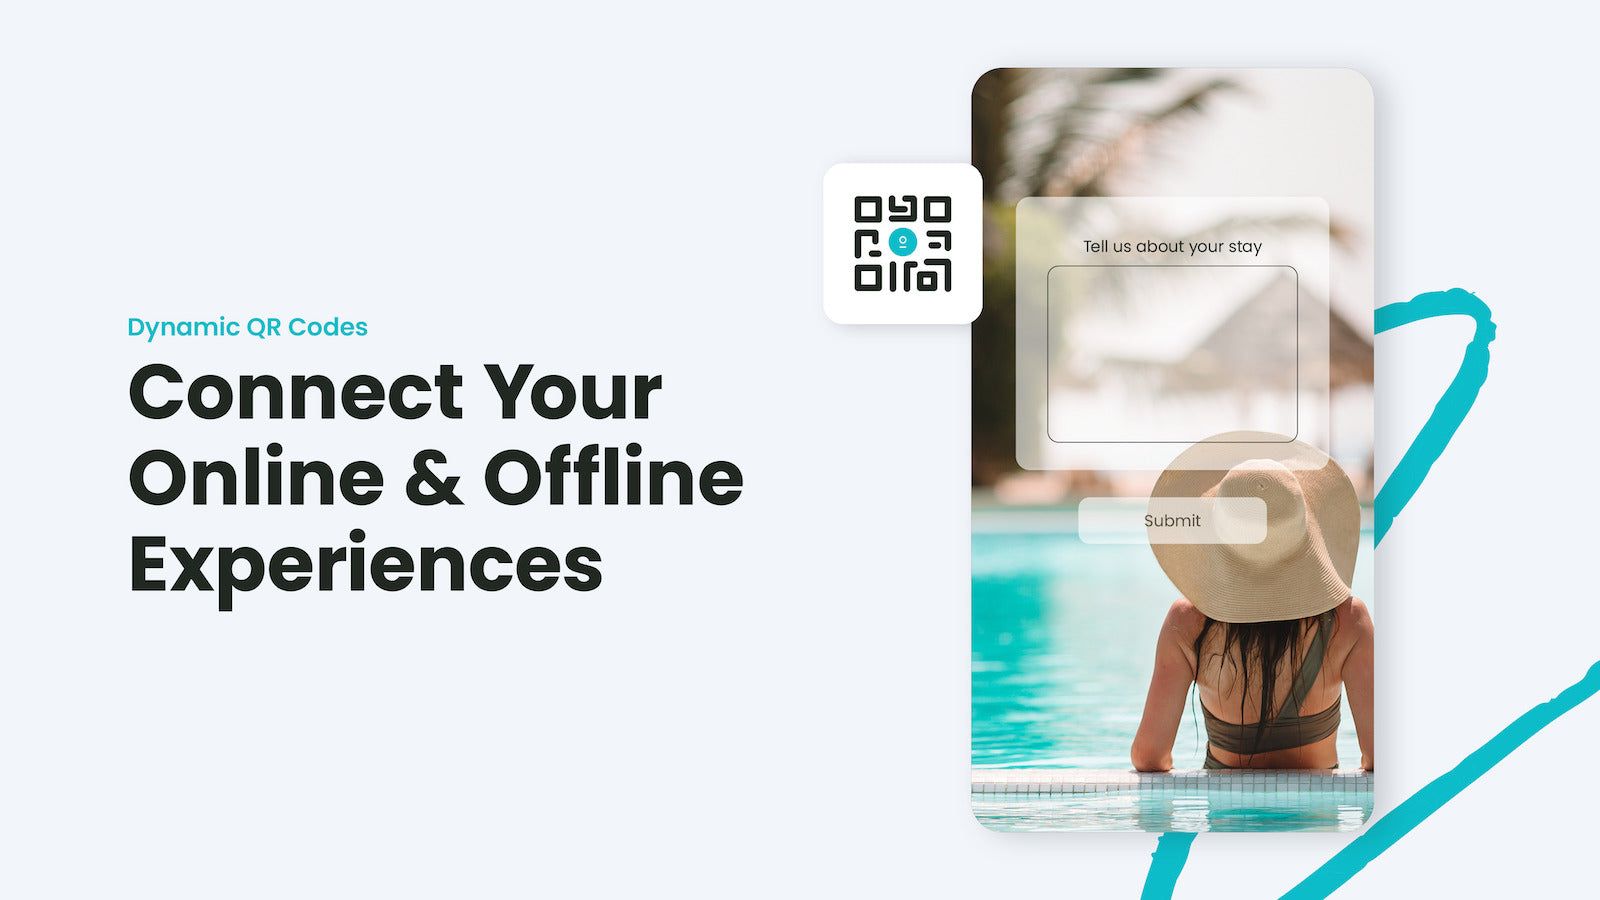 Connect your online & offline experiences.